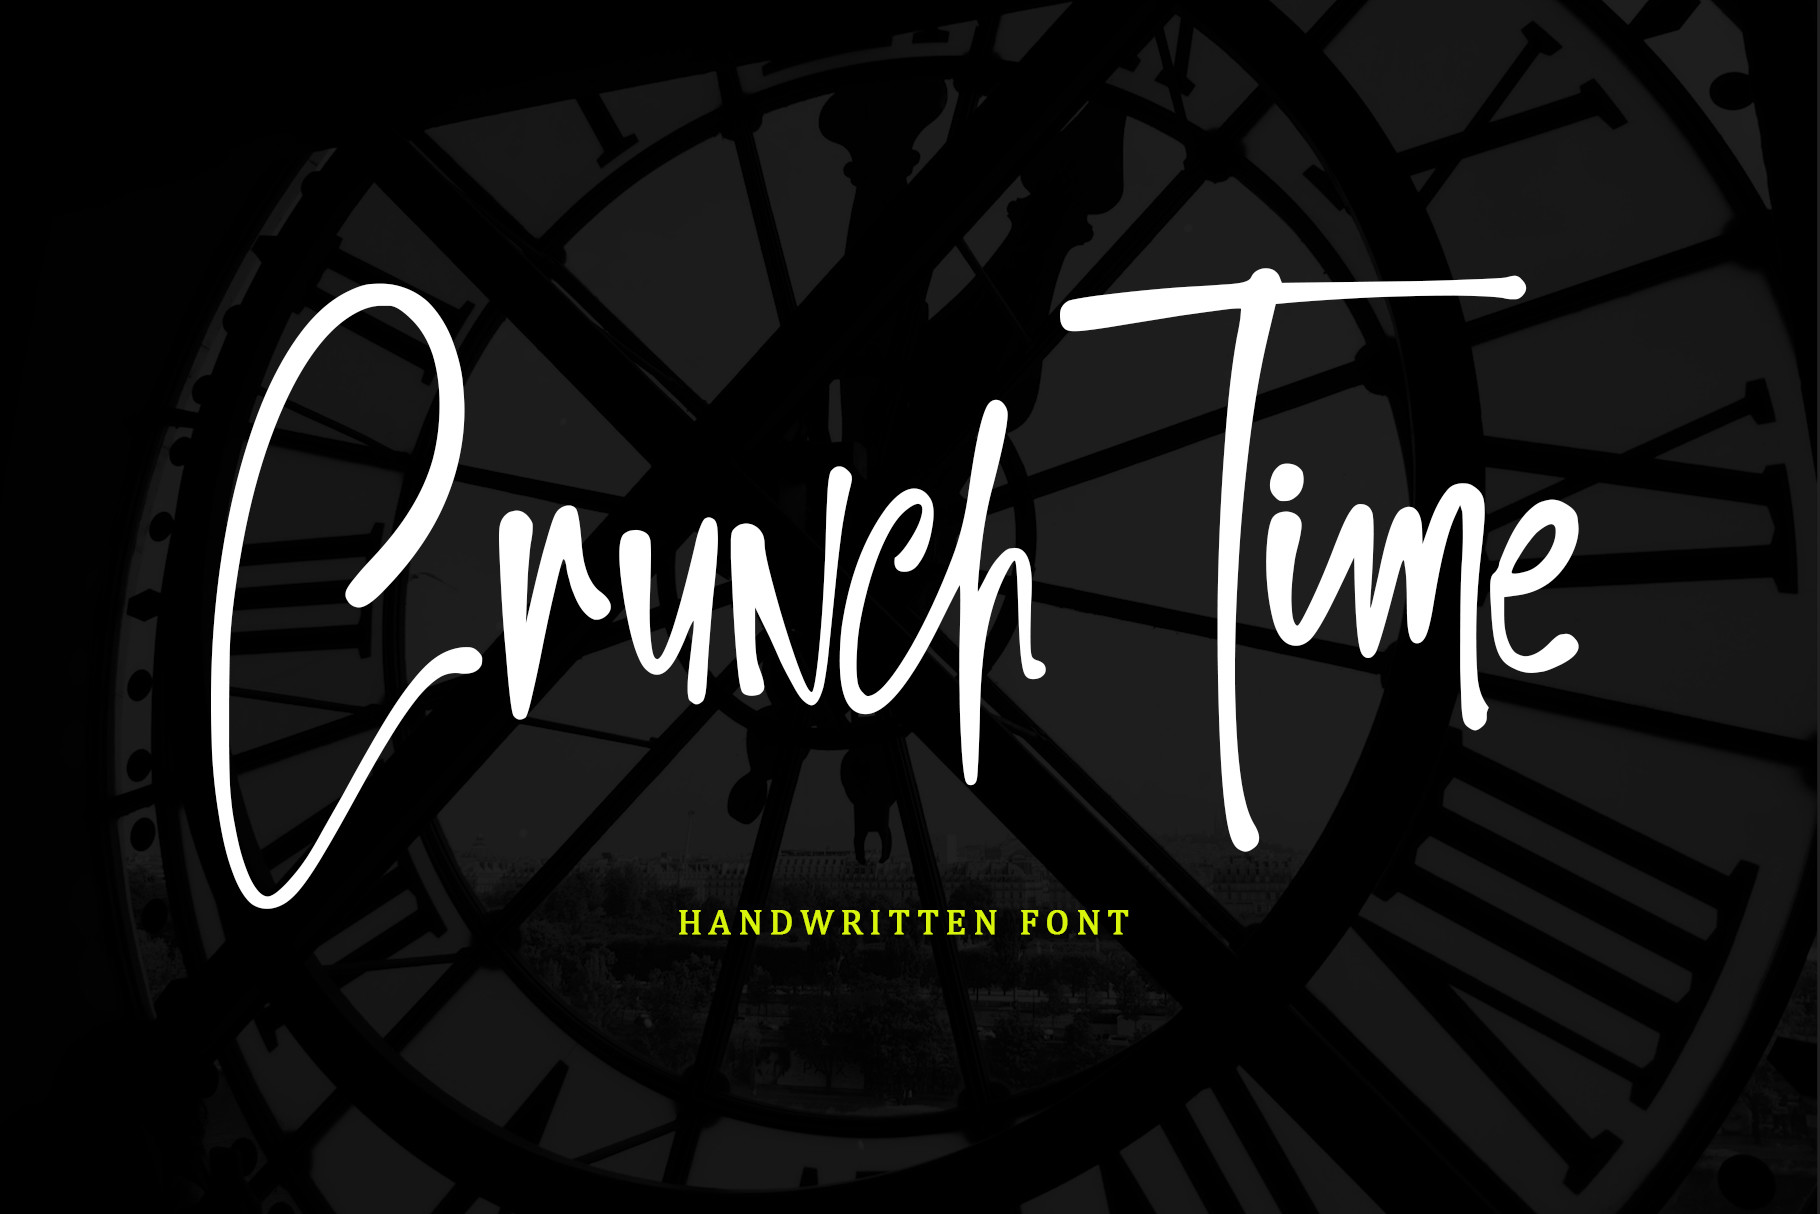 Crunch Time Font